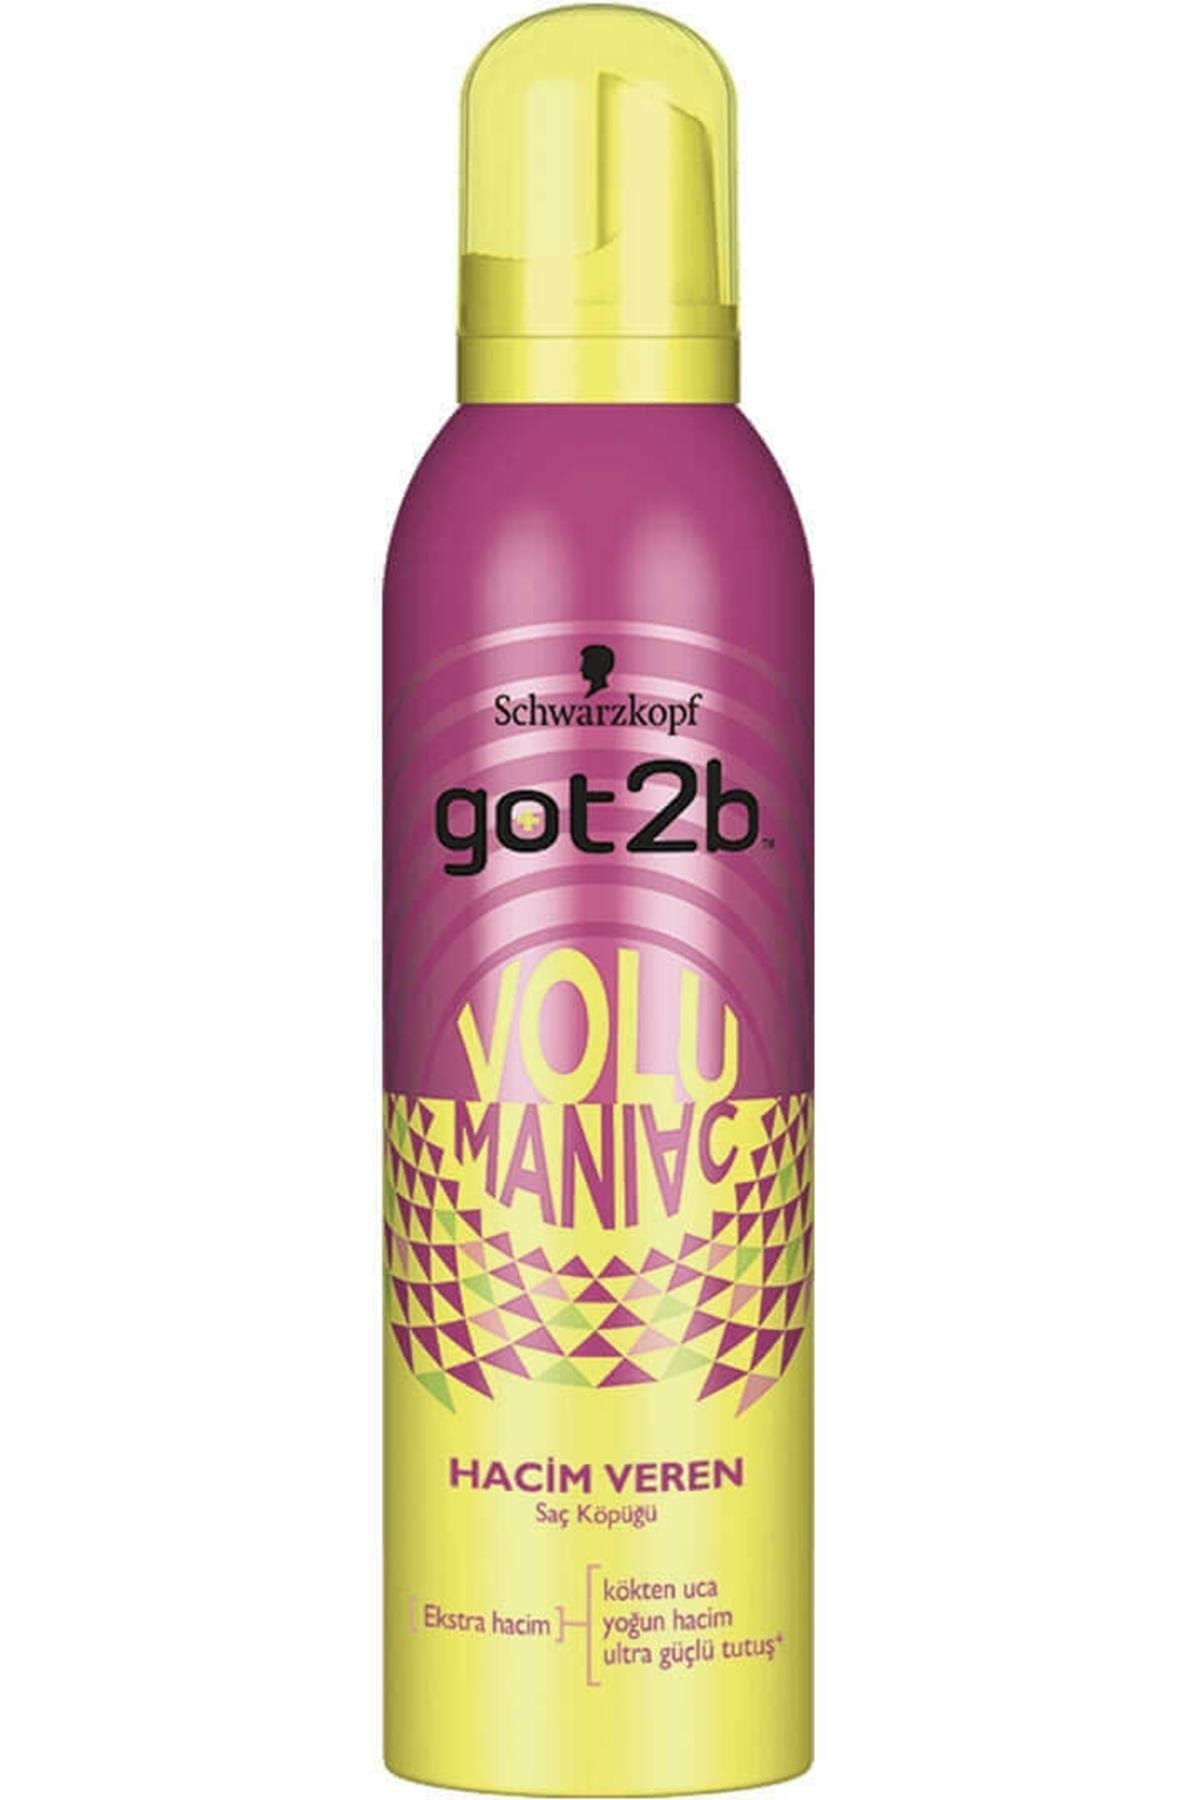 Got2B Marka: Volumaniac Süper Hacim Veren Saç Köpüğü Kategori: Saç Köpüğü